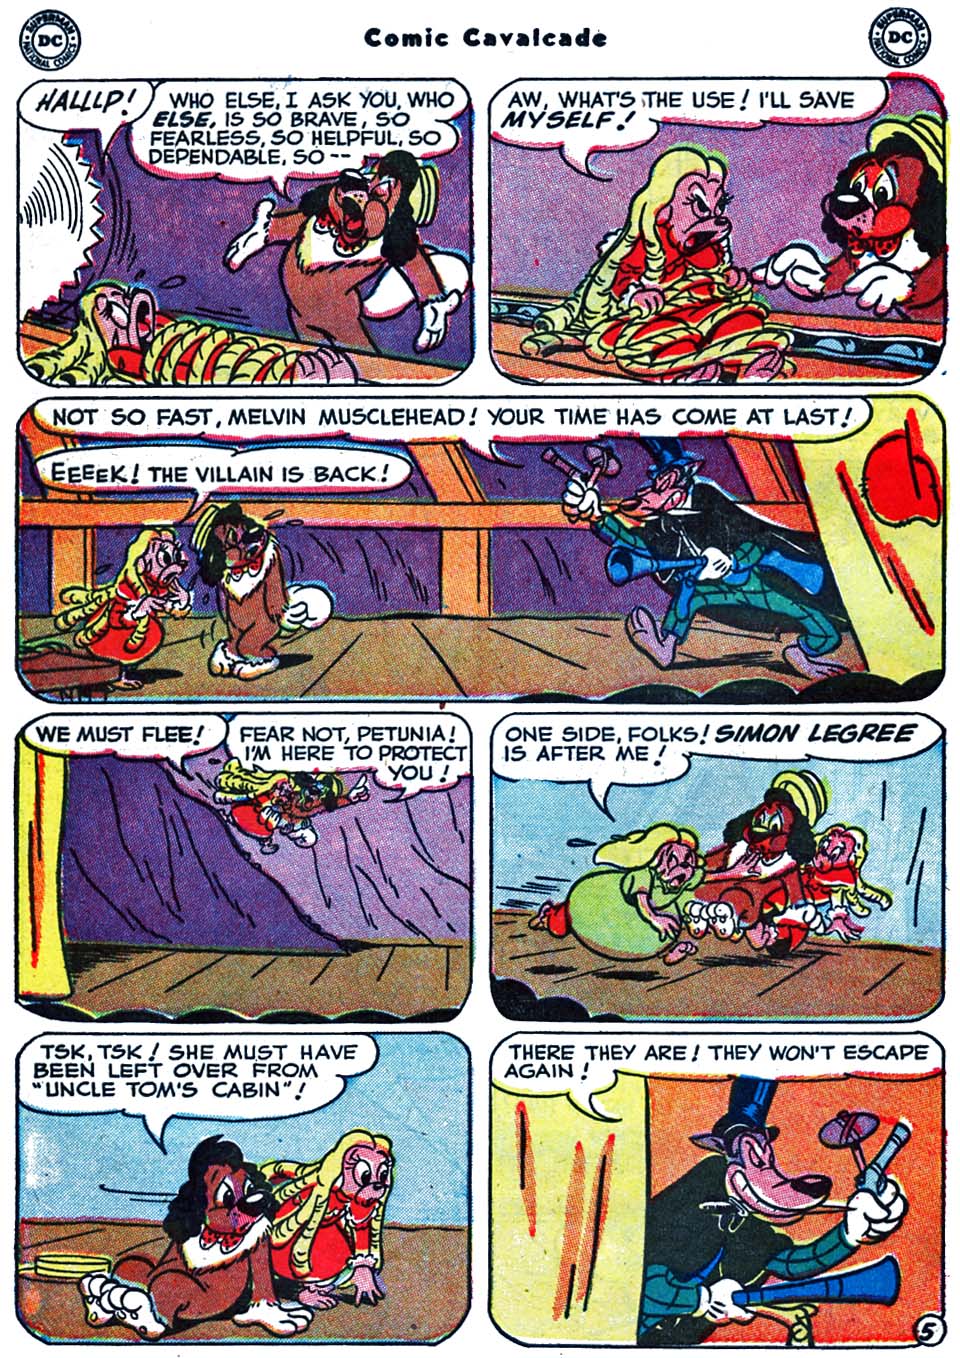 Comic Cavalcade issue 51 - Page 56